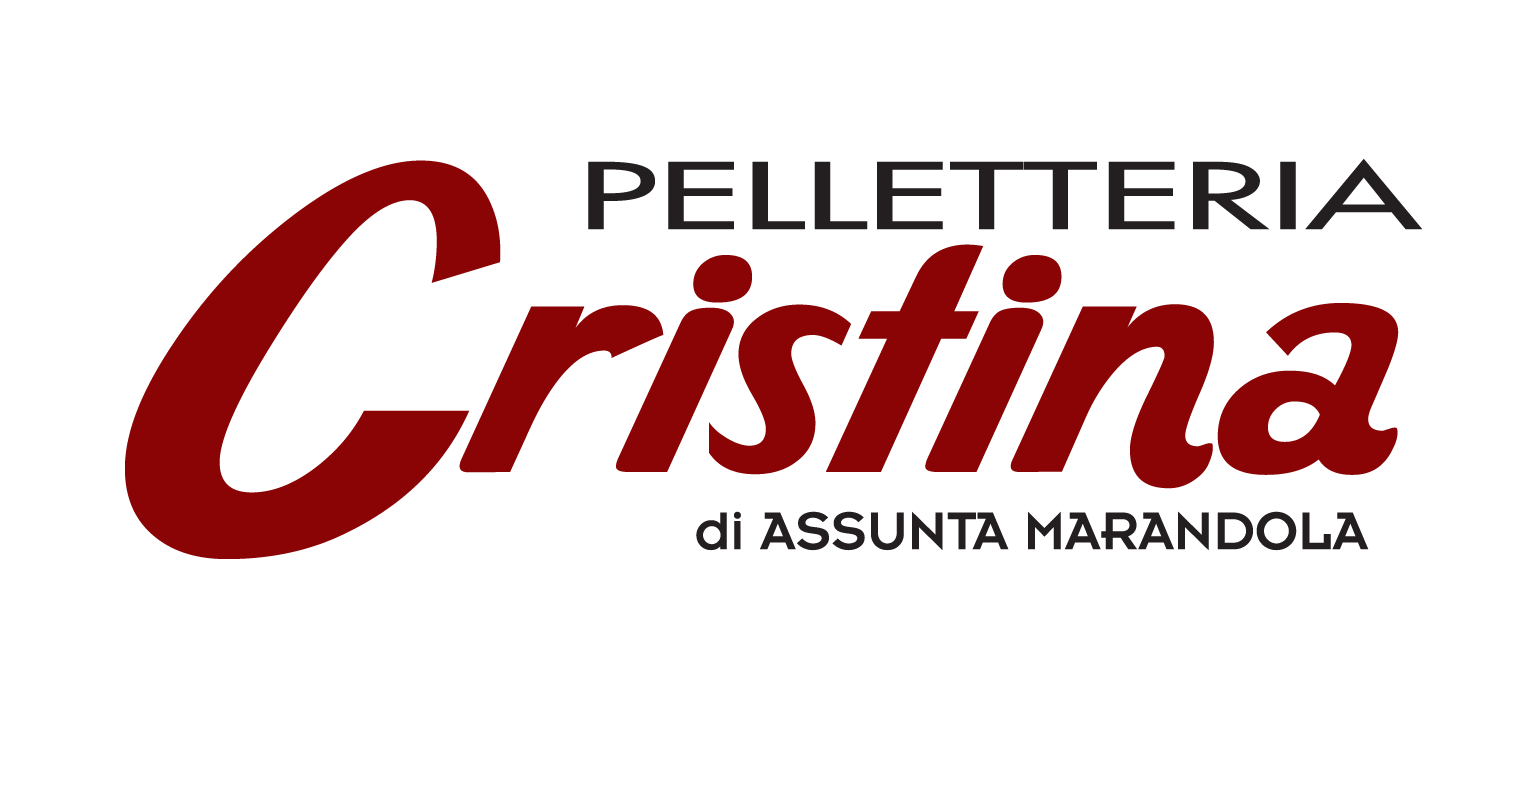 Pelletteria Cristina di Assunta Marandola - Logo